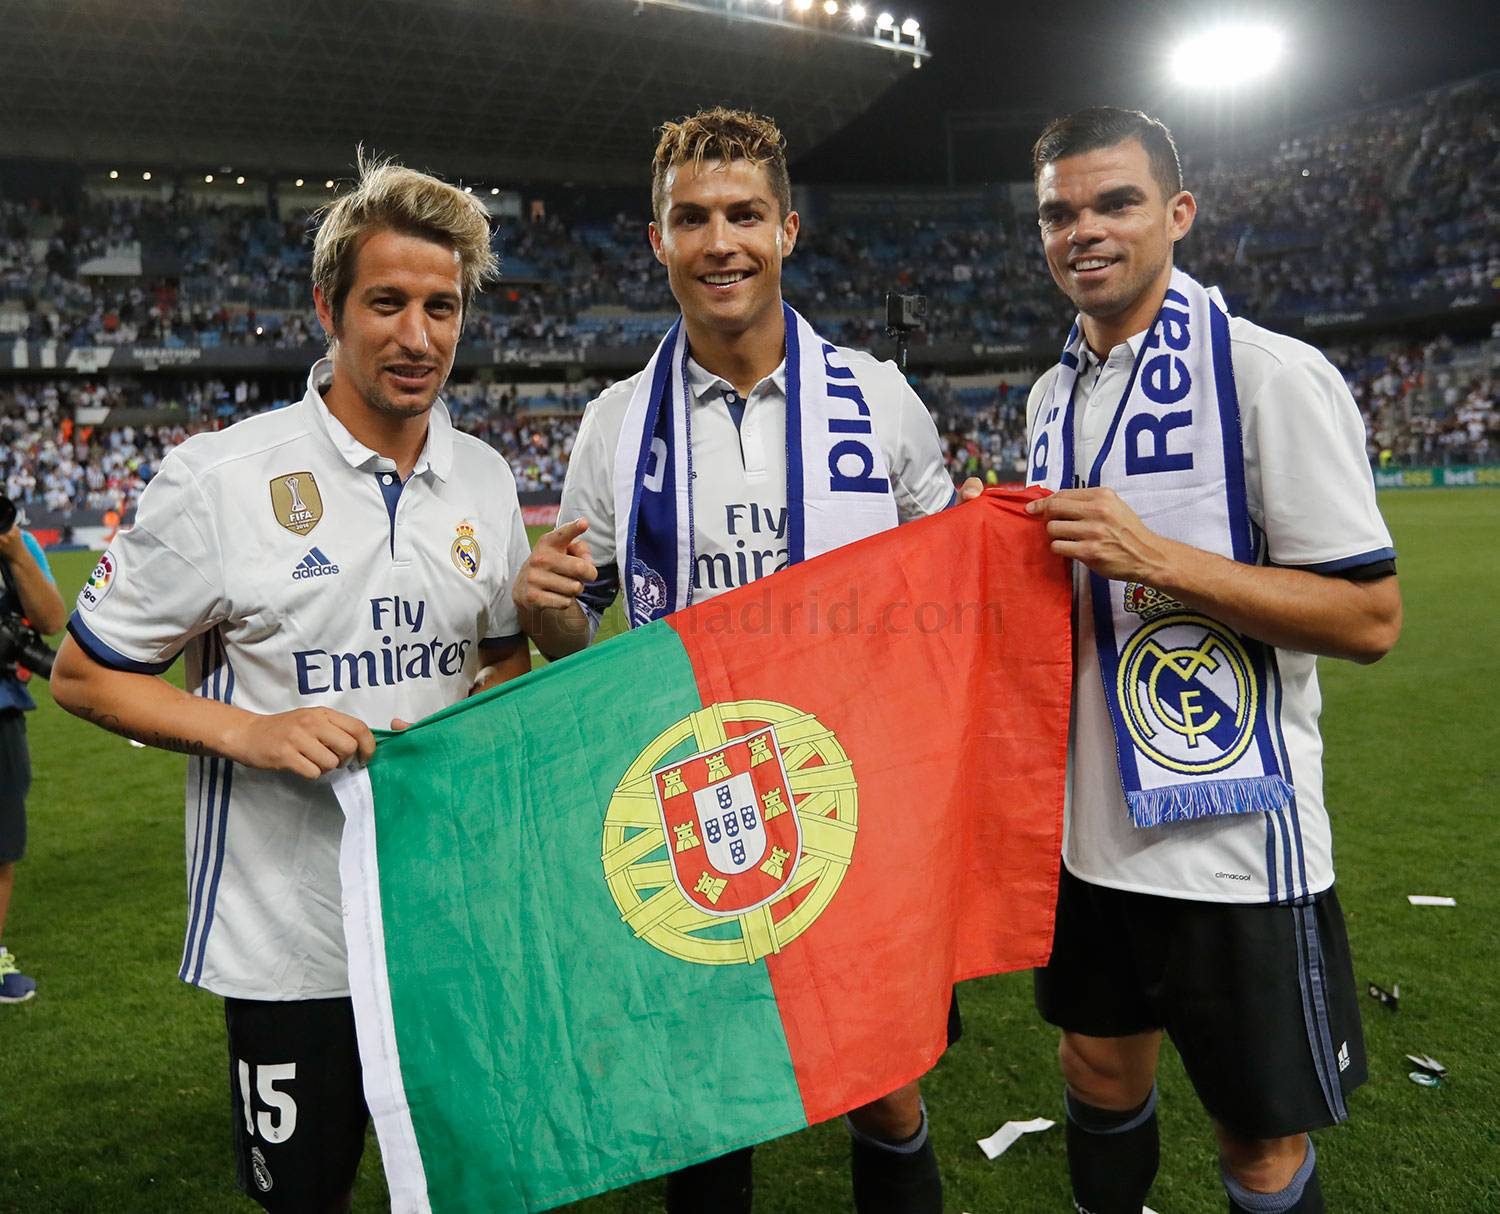 PORTUGAL. Fabio CoentrÃ£o, Cristiano Ronaldo, dan Pepe membentangkan bendera Portugal, negara asal mereka. Foto dari realmadrid.com 